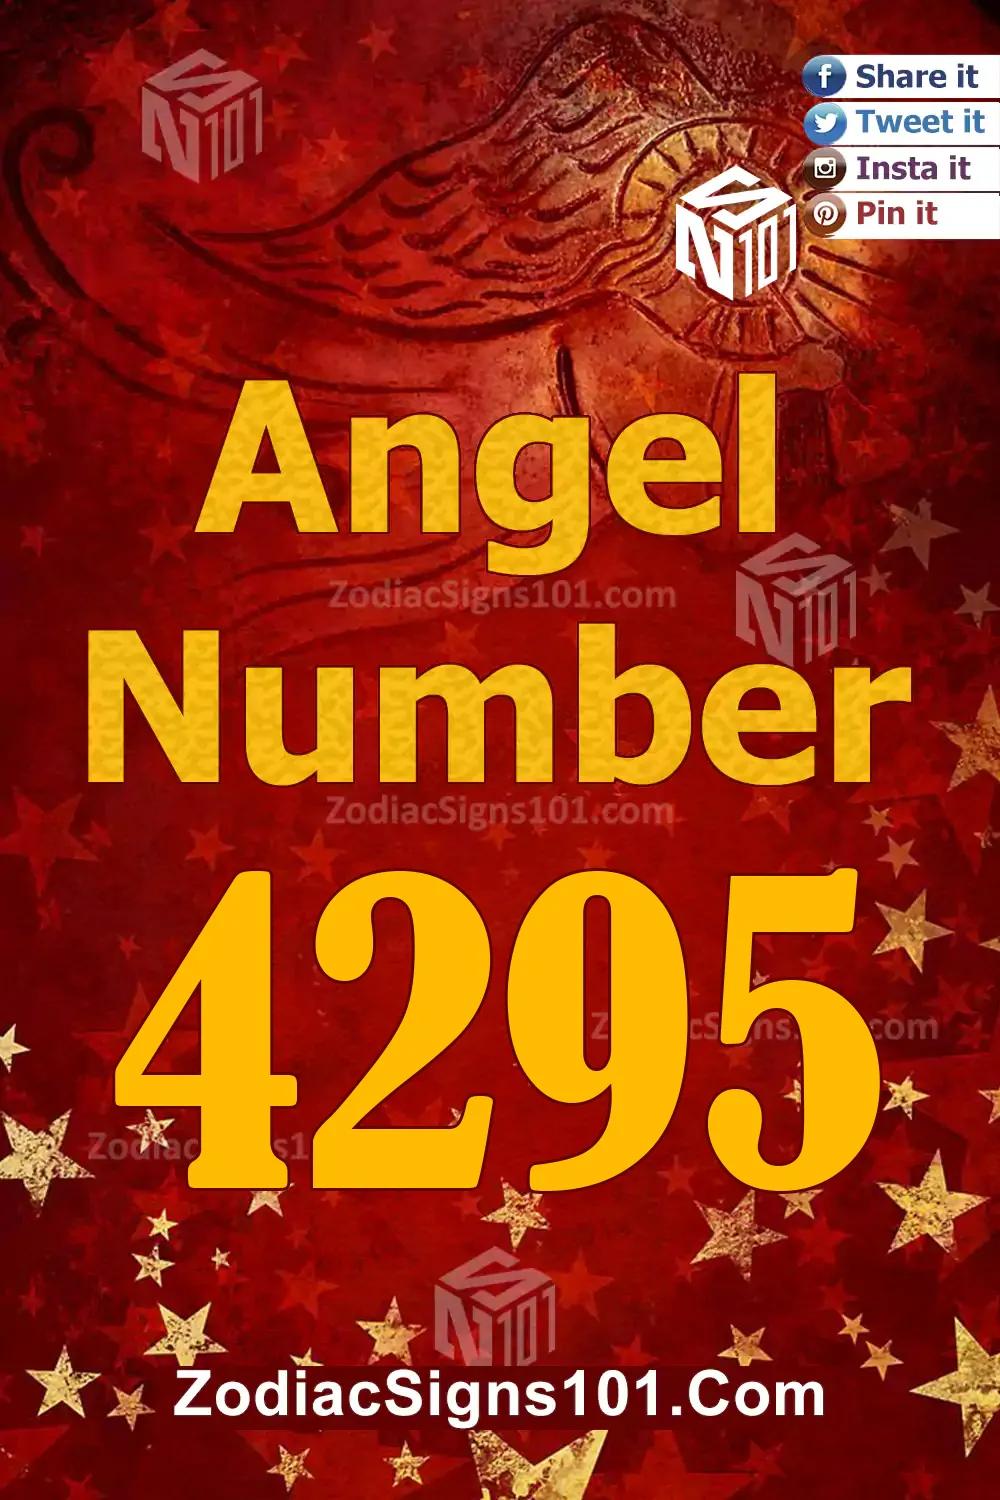 4295-Angel-Number-Meaning.jpg